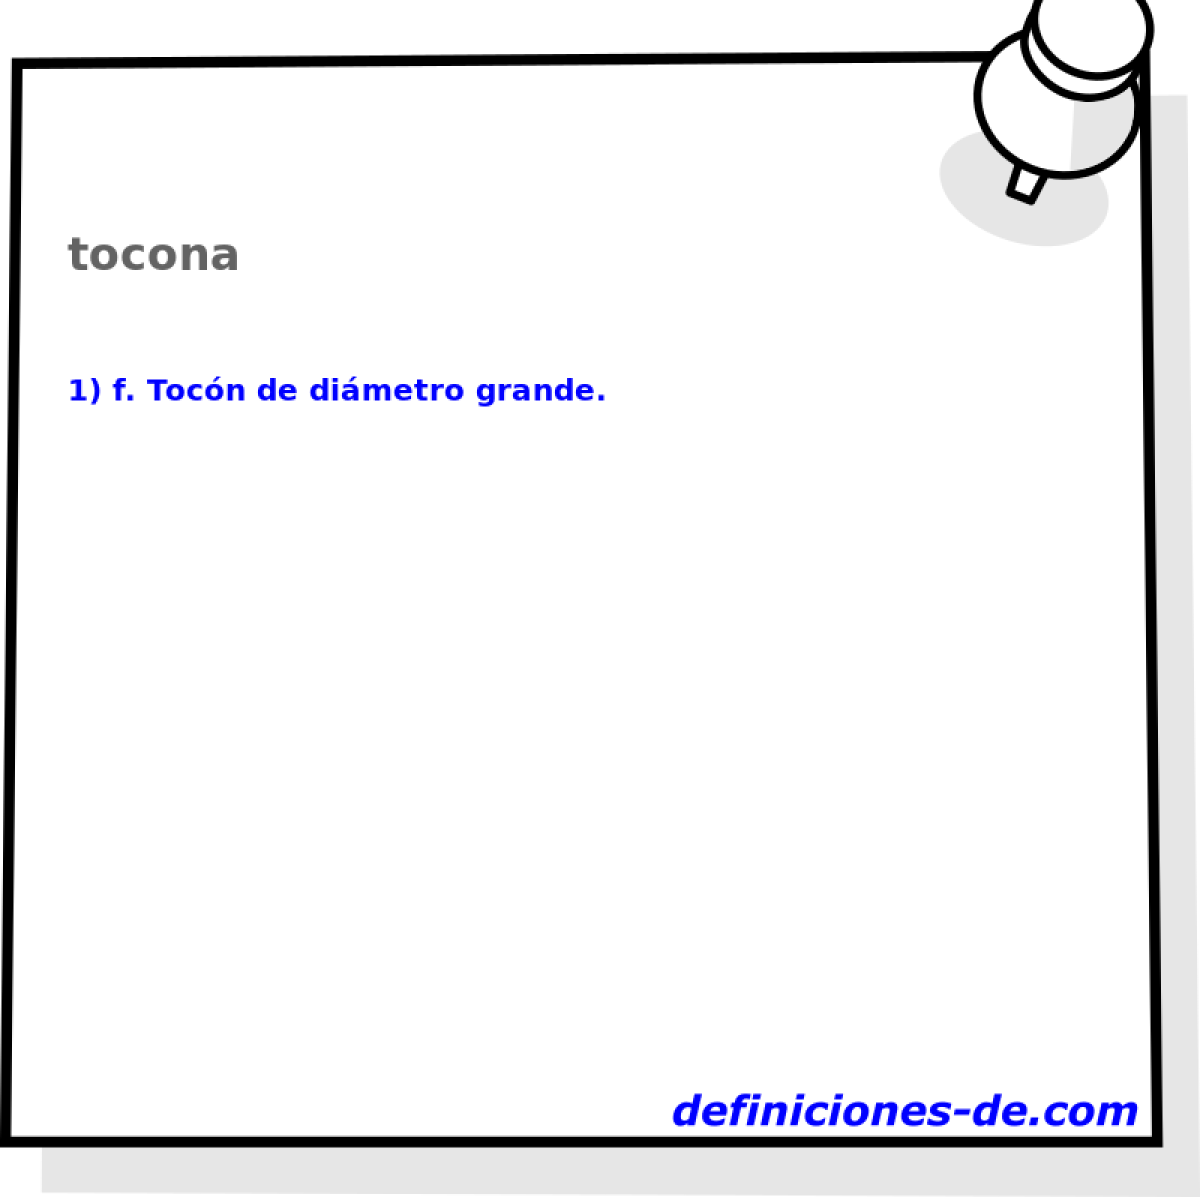 tocona 